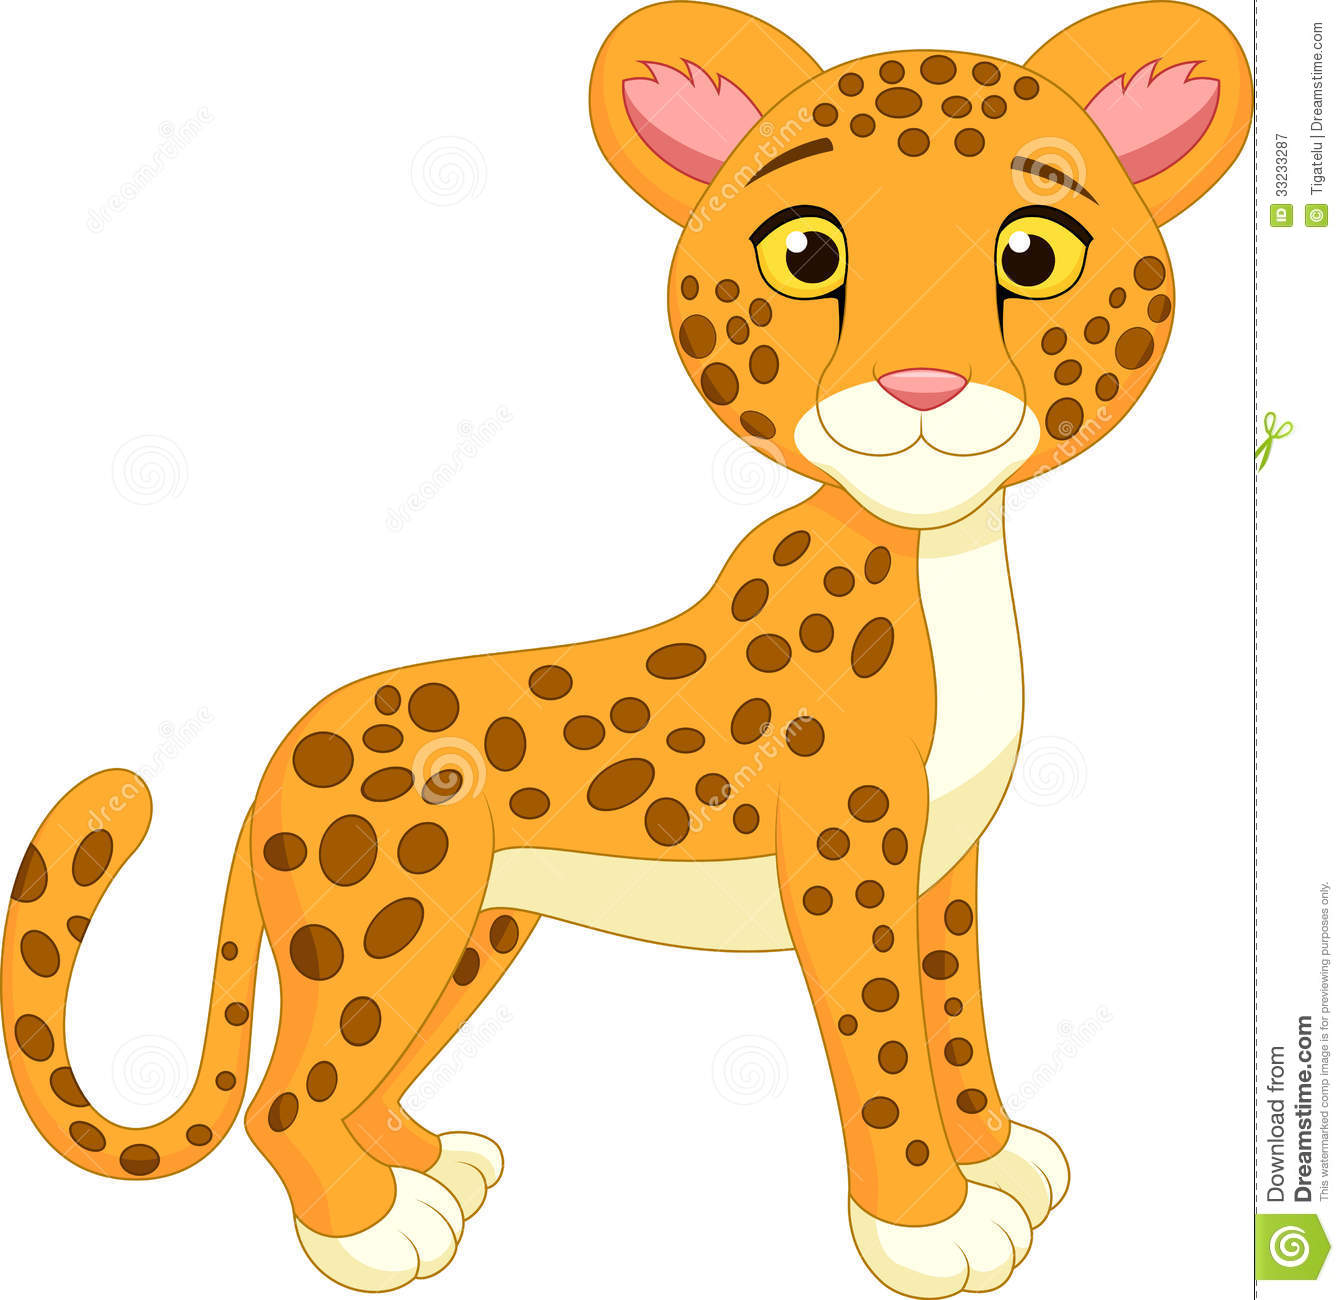 Cute Cheetah Cartoon Royalty Free Stock Photography   Image  33233287